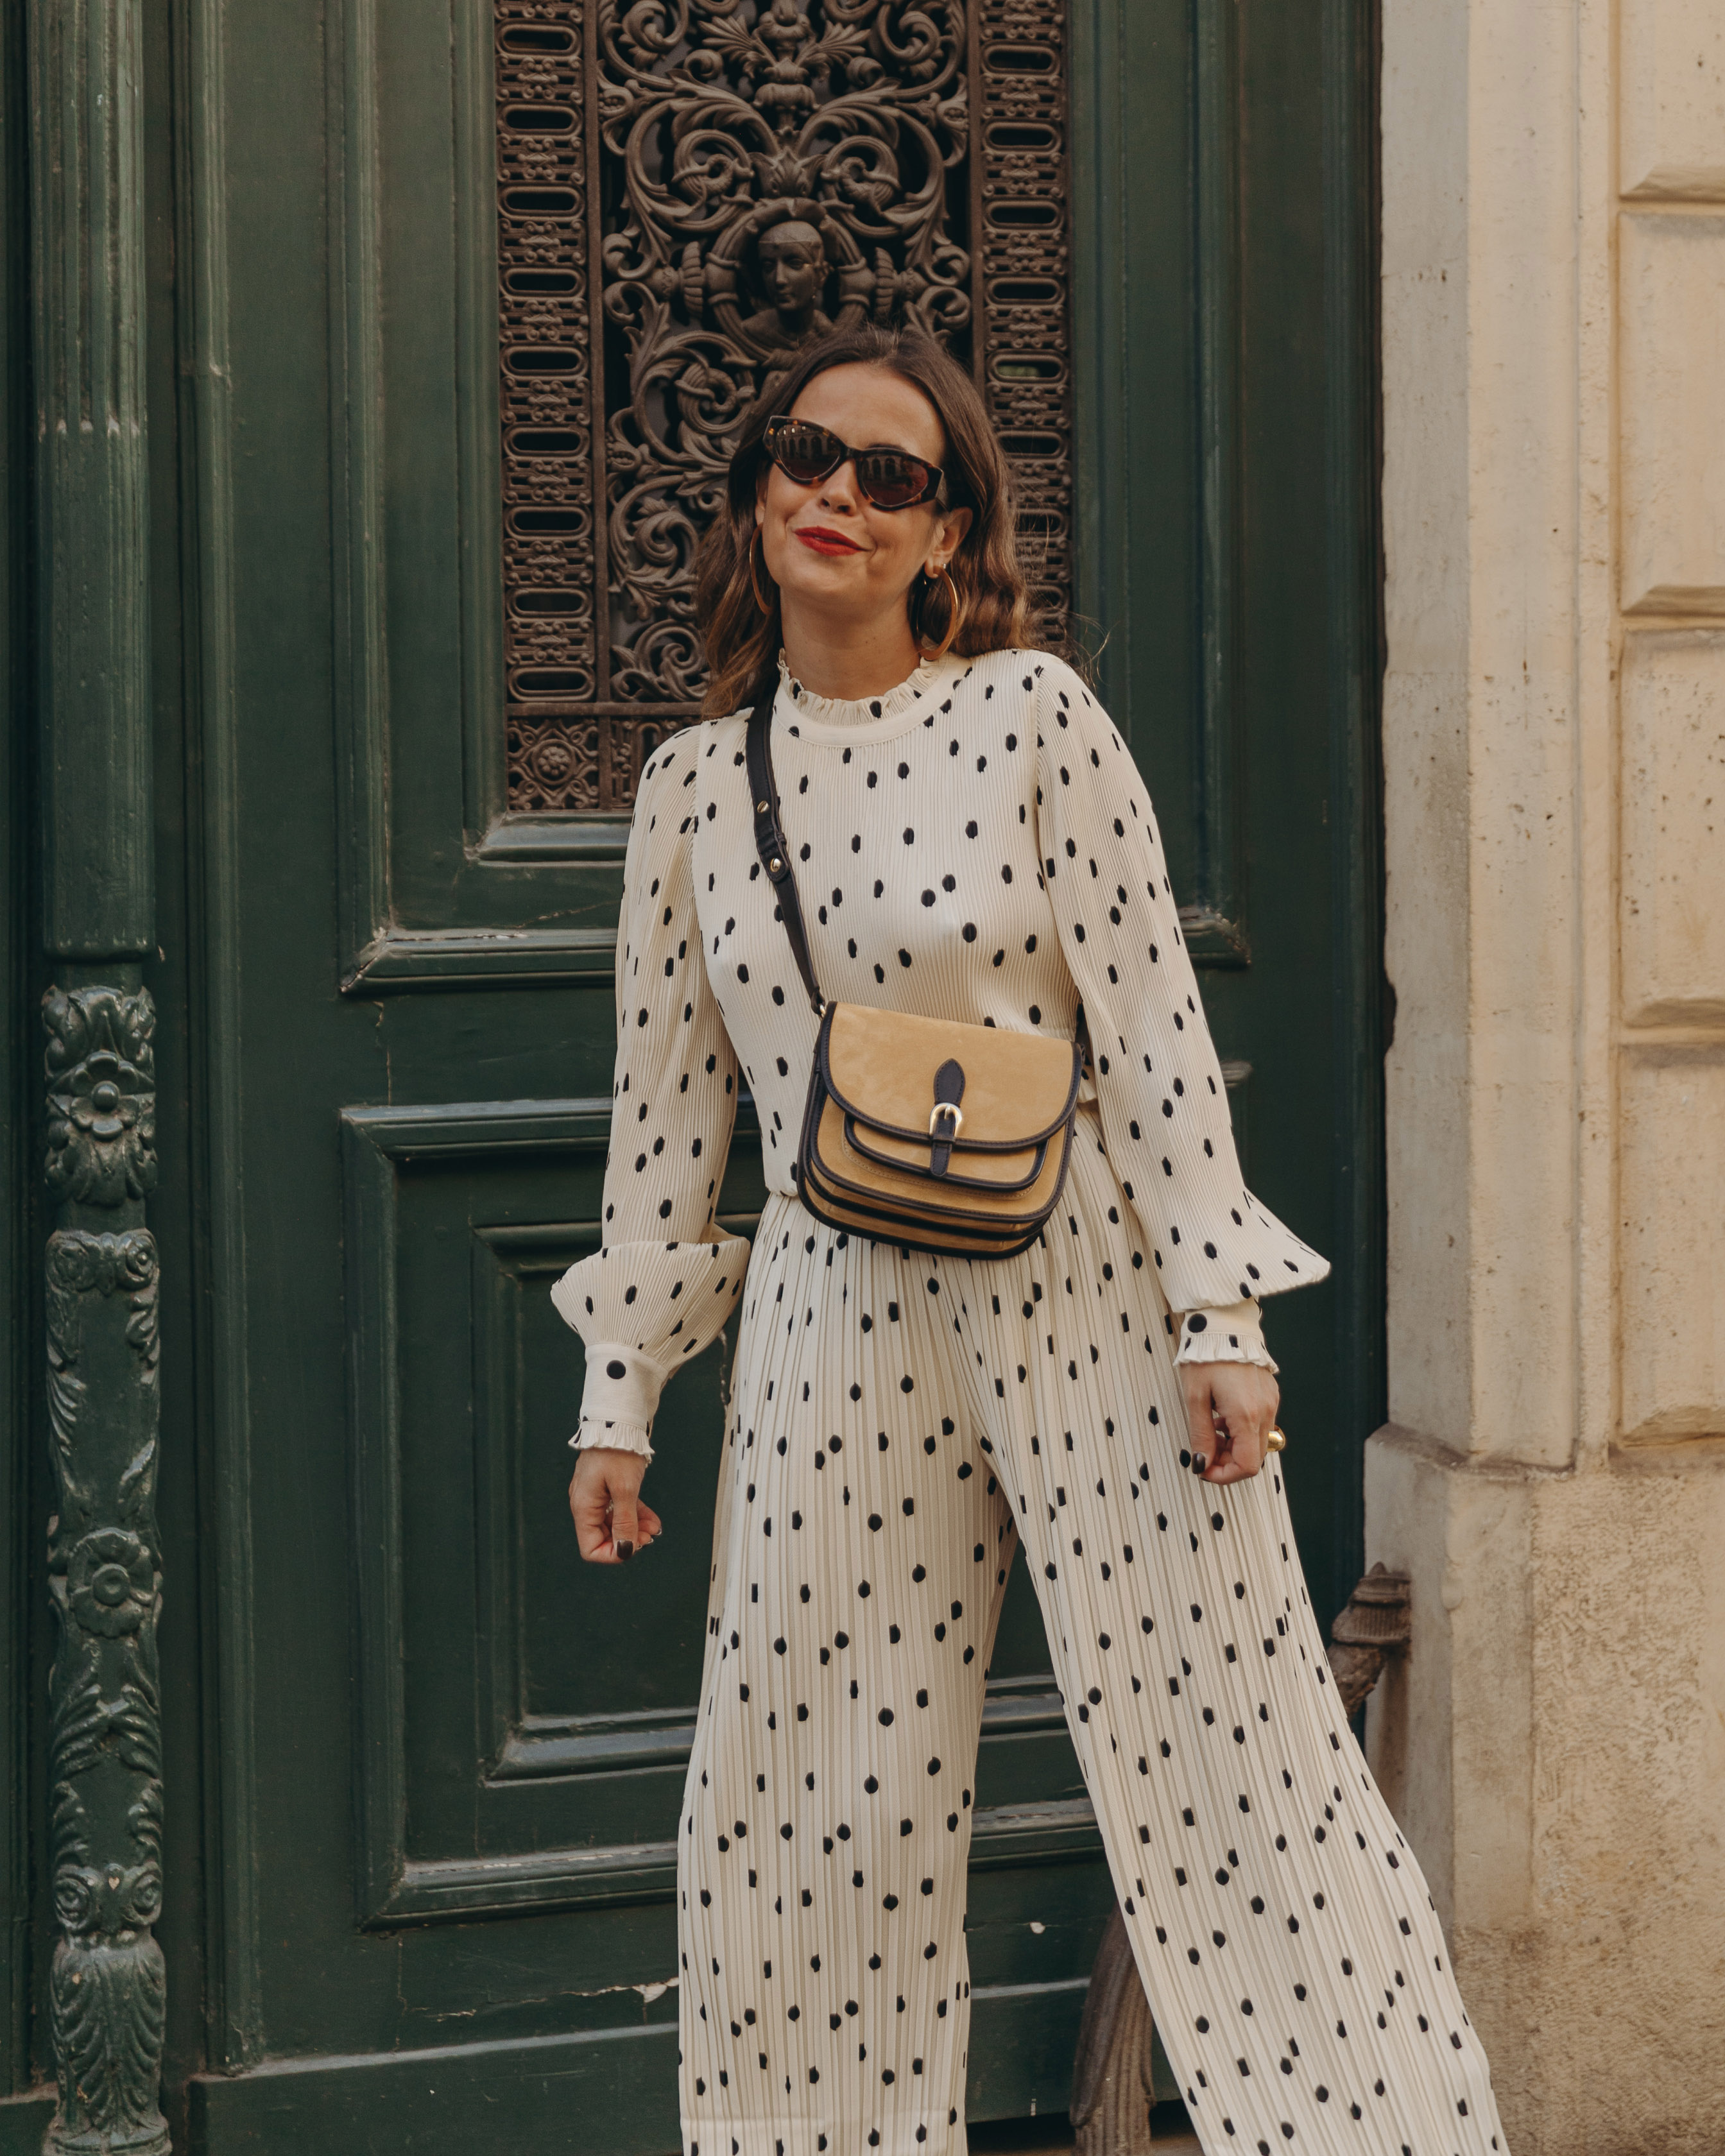 Sara from Collage Vintage at Saint Germain Paris wearing a Sézane polka dots set and a leather crossbody bag.